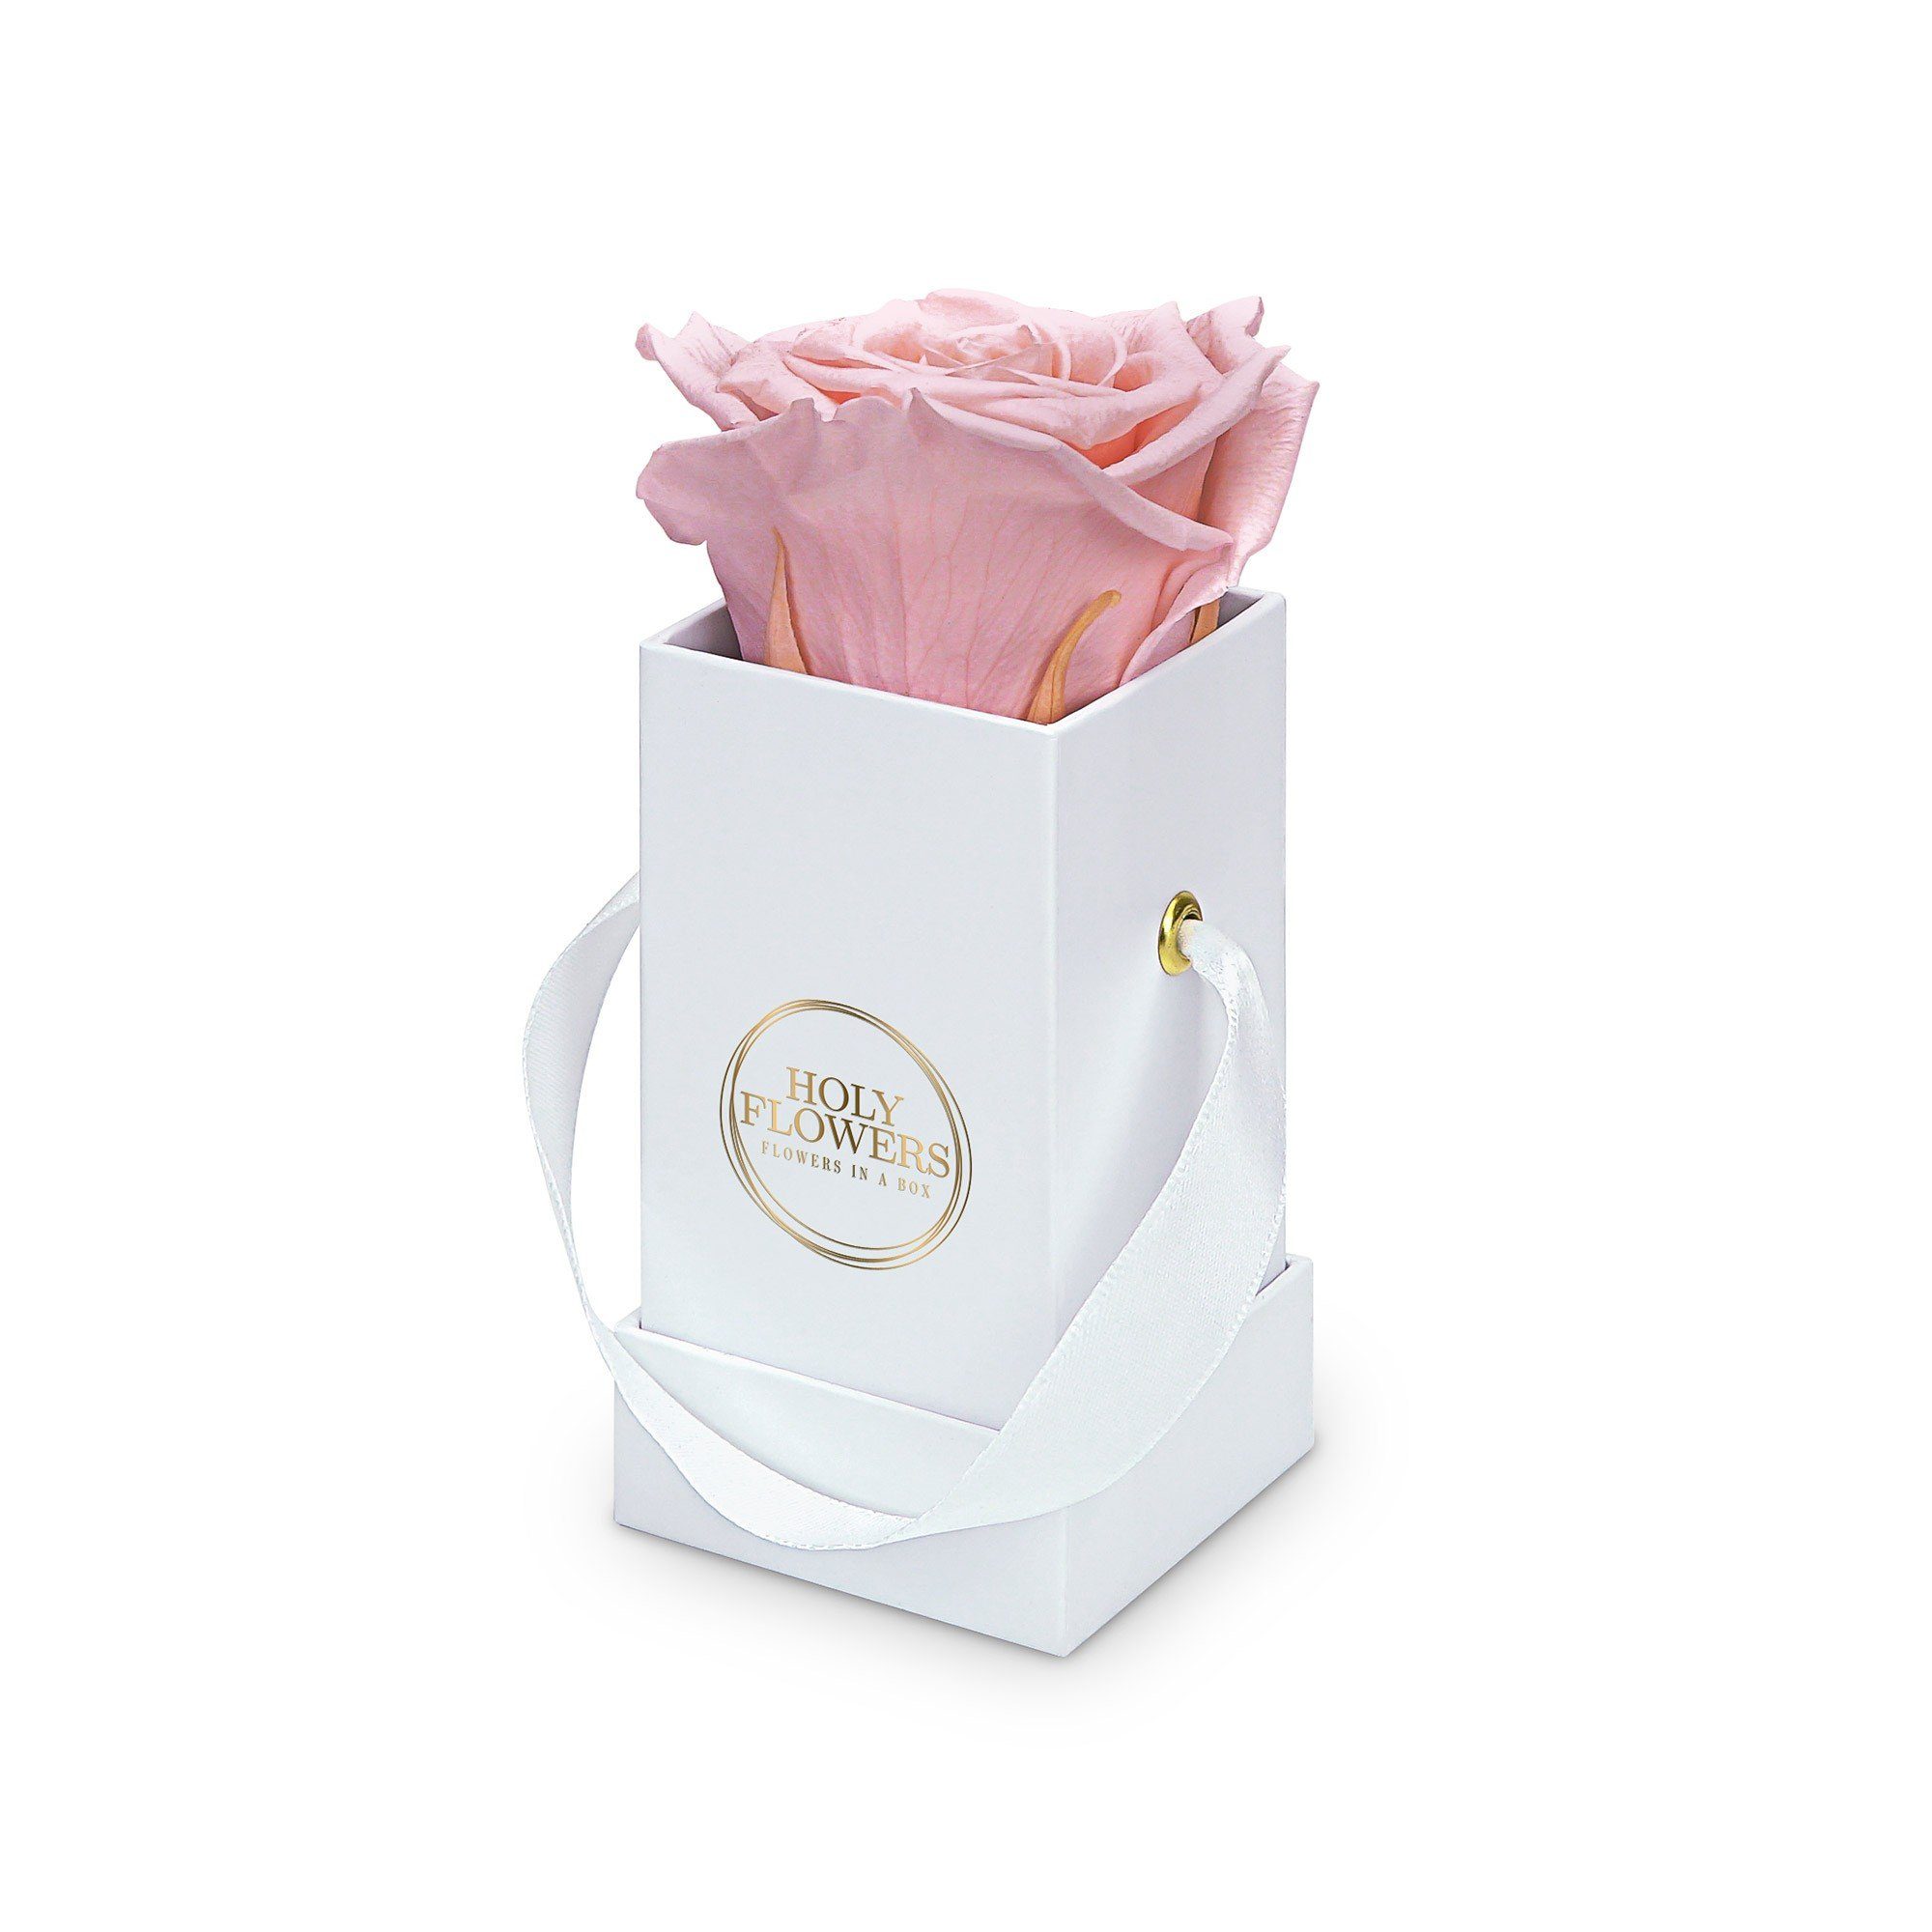 Kunstblume Eckige Rosenbox in weiß mit 1er Infinity Rose I 3 Jahre haltbar I Echte, duftende konservierte Blumen I by Raul Richter Infinity Rose, Holy Flowers, Höhe 9 cm Pink Blush